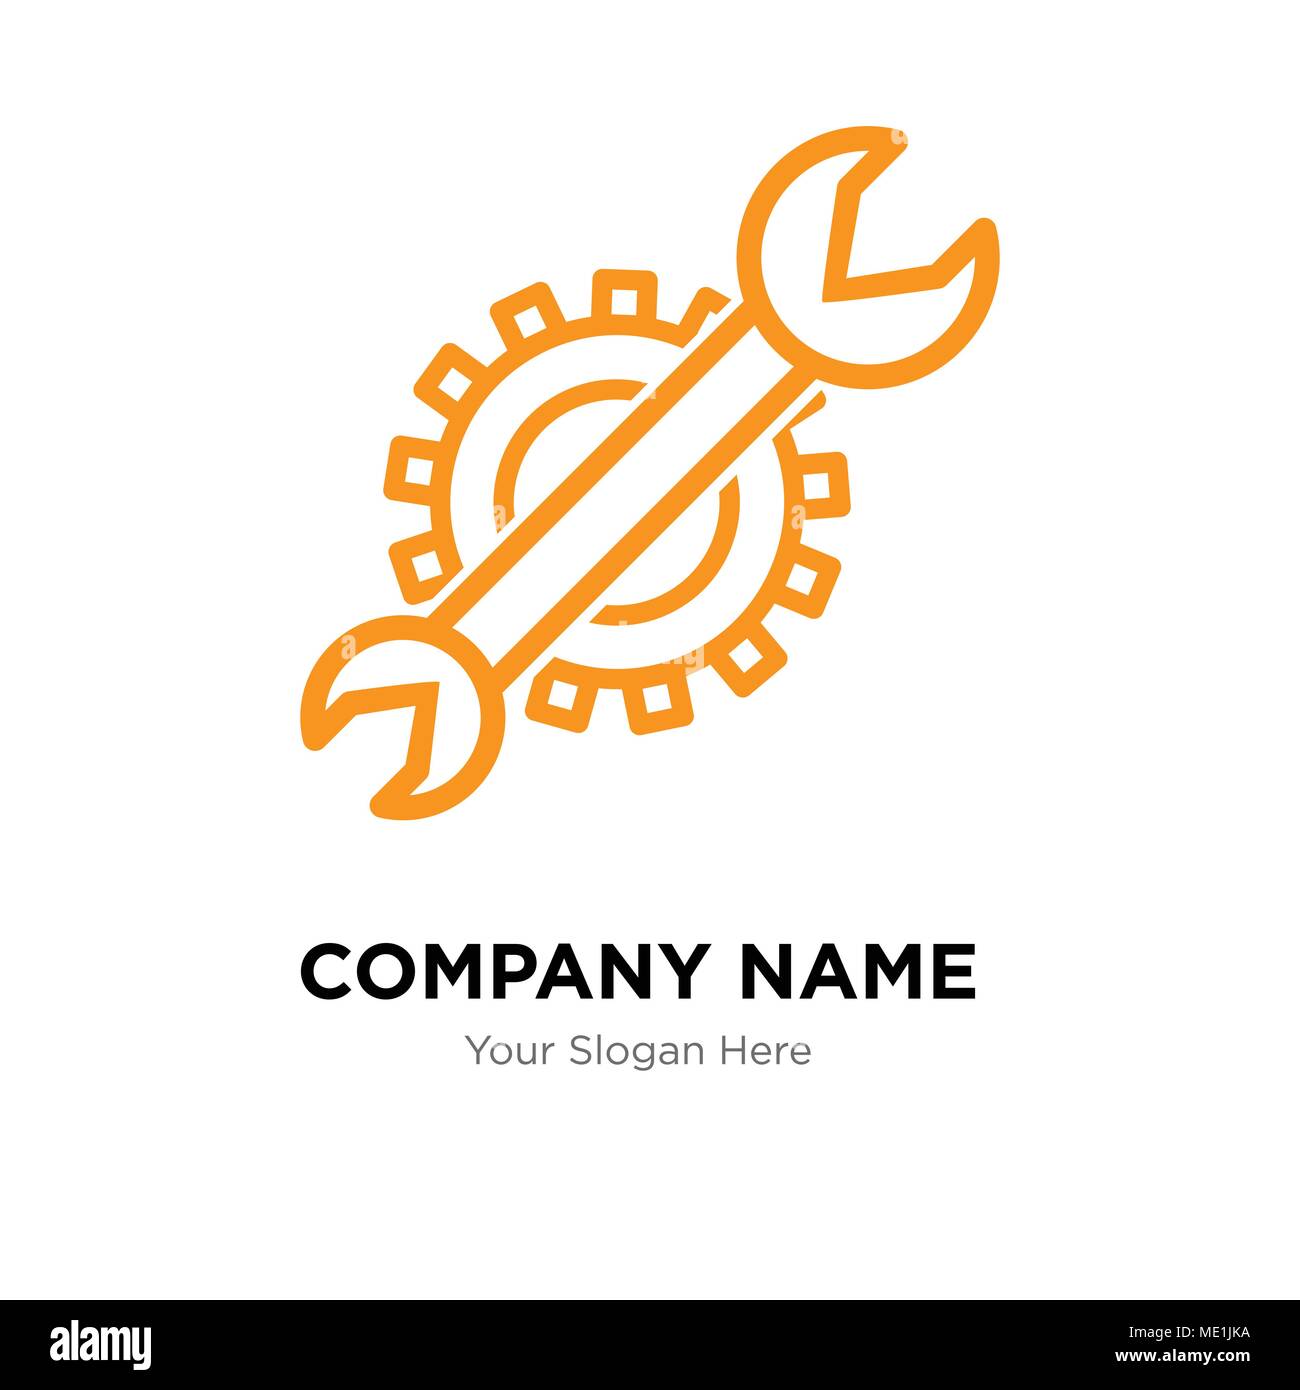 Settings company logo design template, Business corporate vector icon Stock Vector